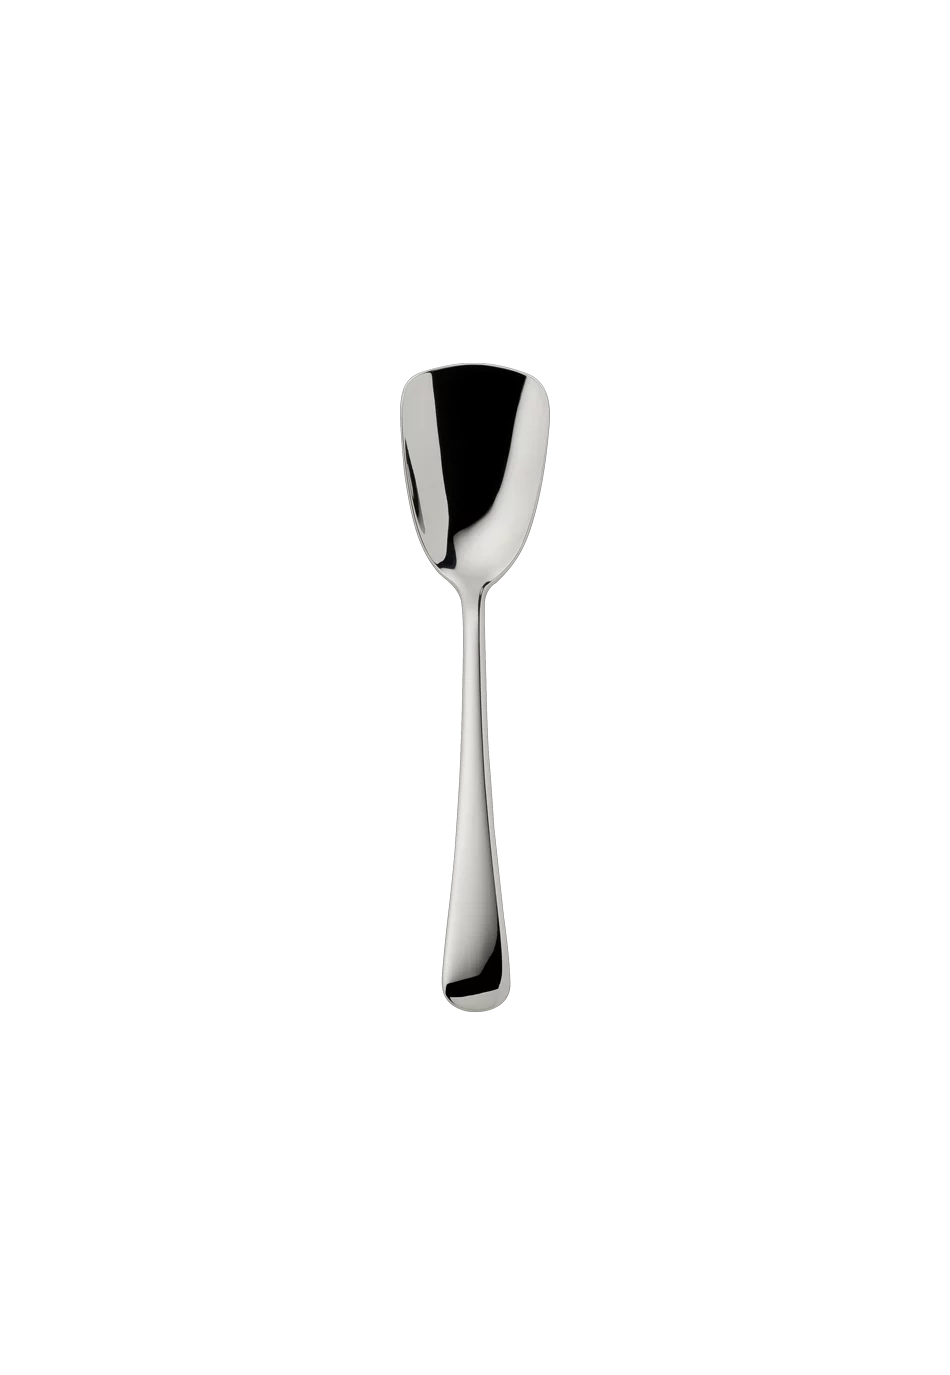 Como Sugar Spoon (18/8 stainless steel)